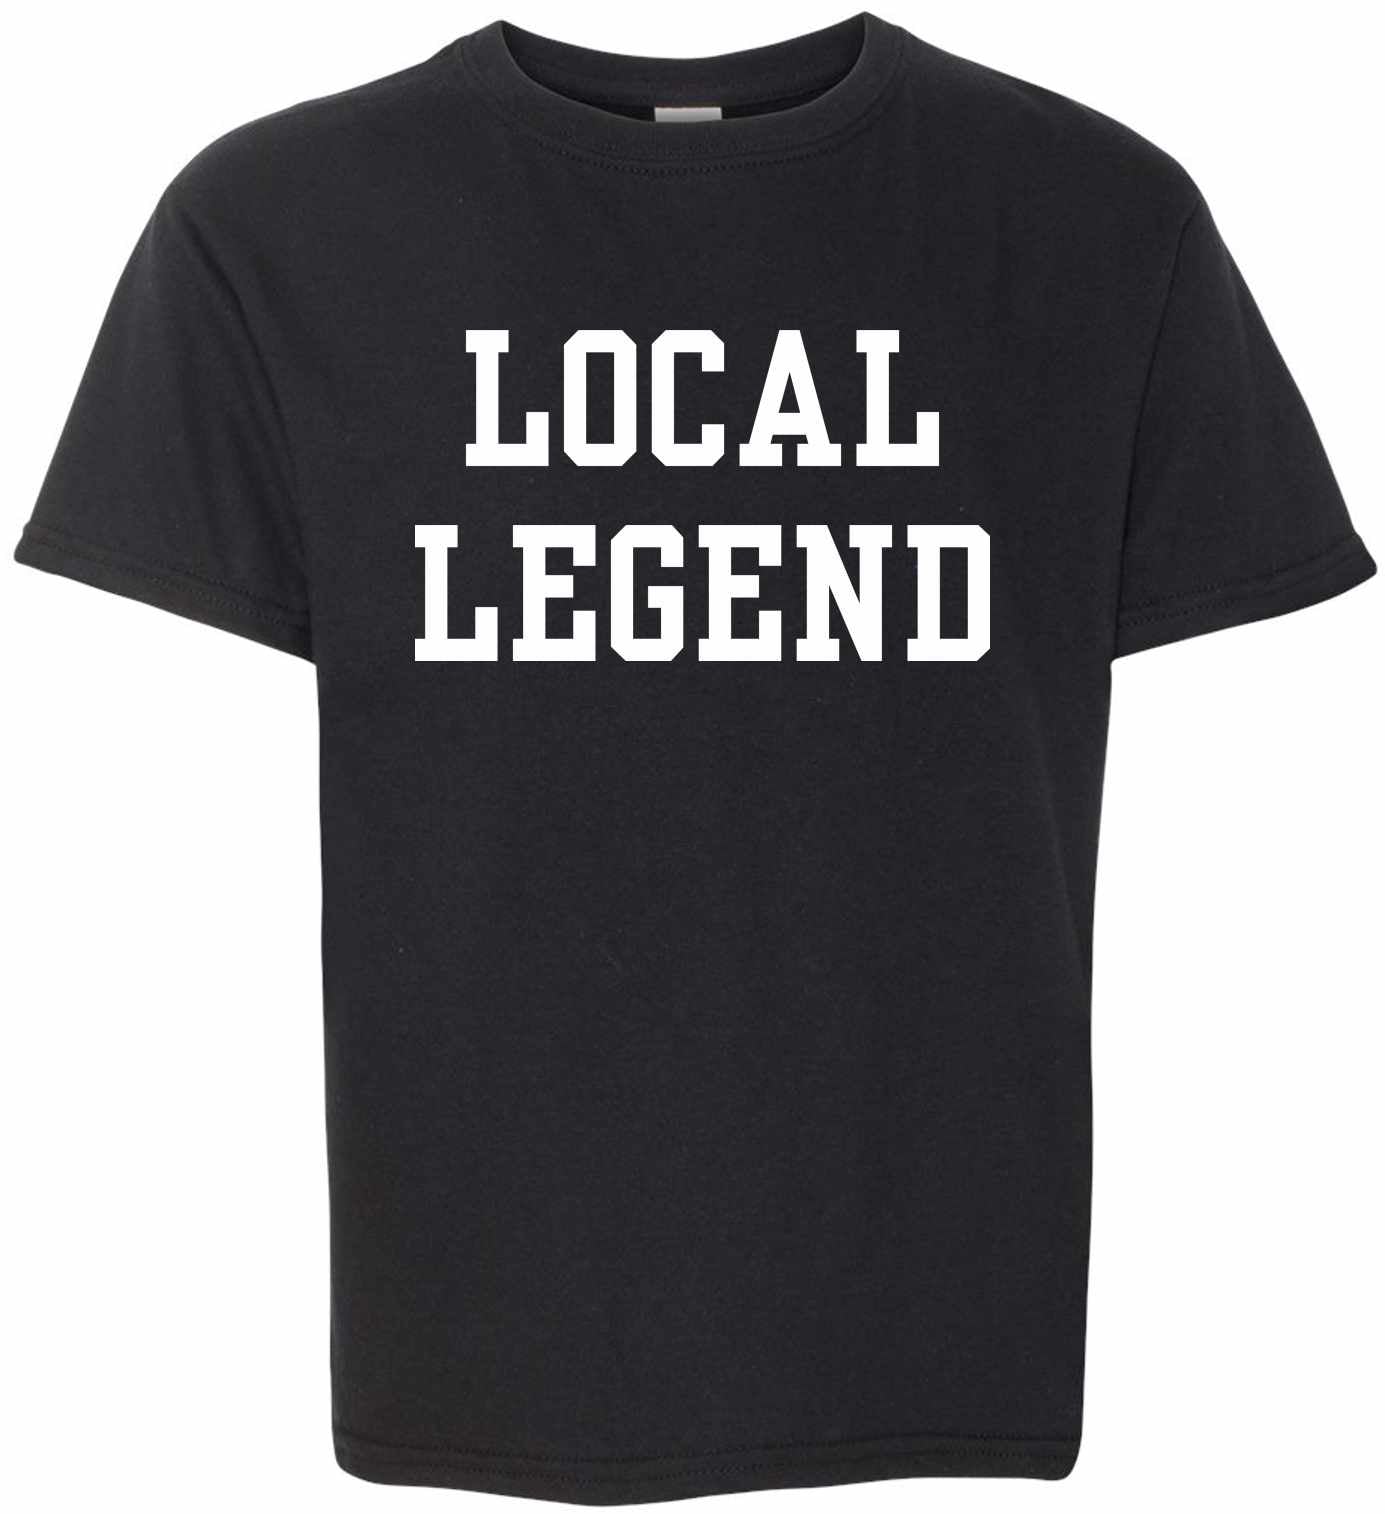 Local Legend on Kids T-Shirt (#1310-201)